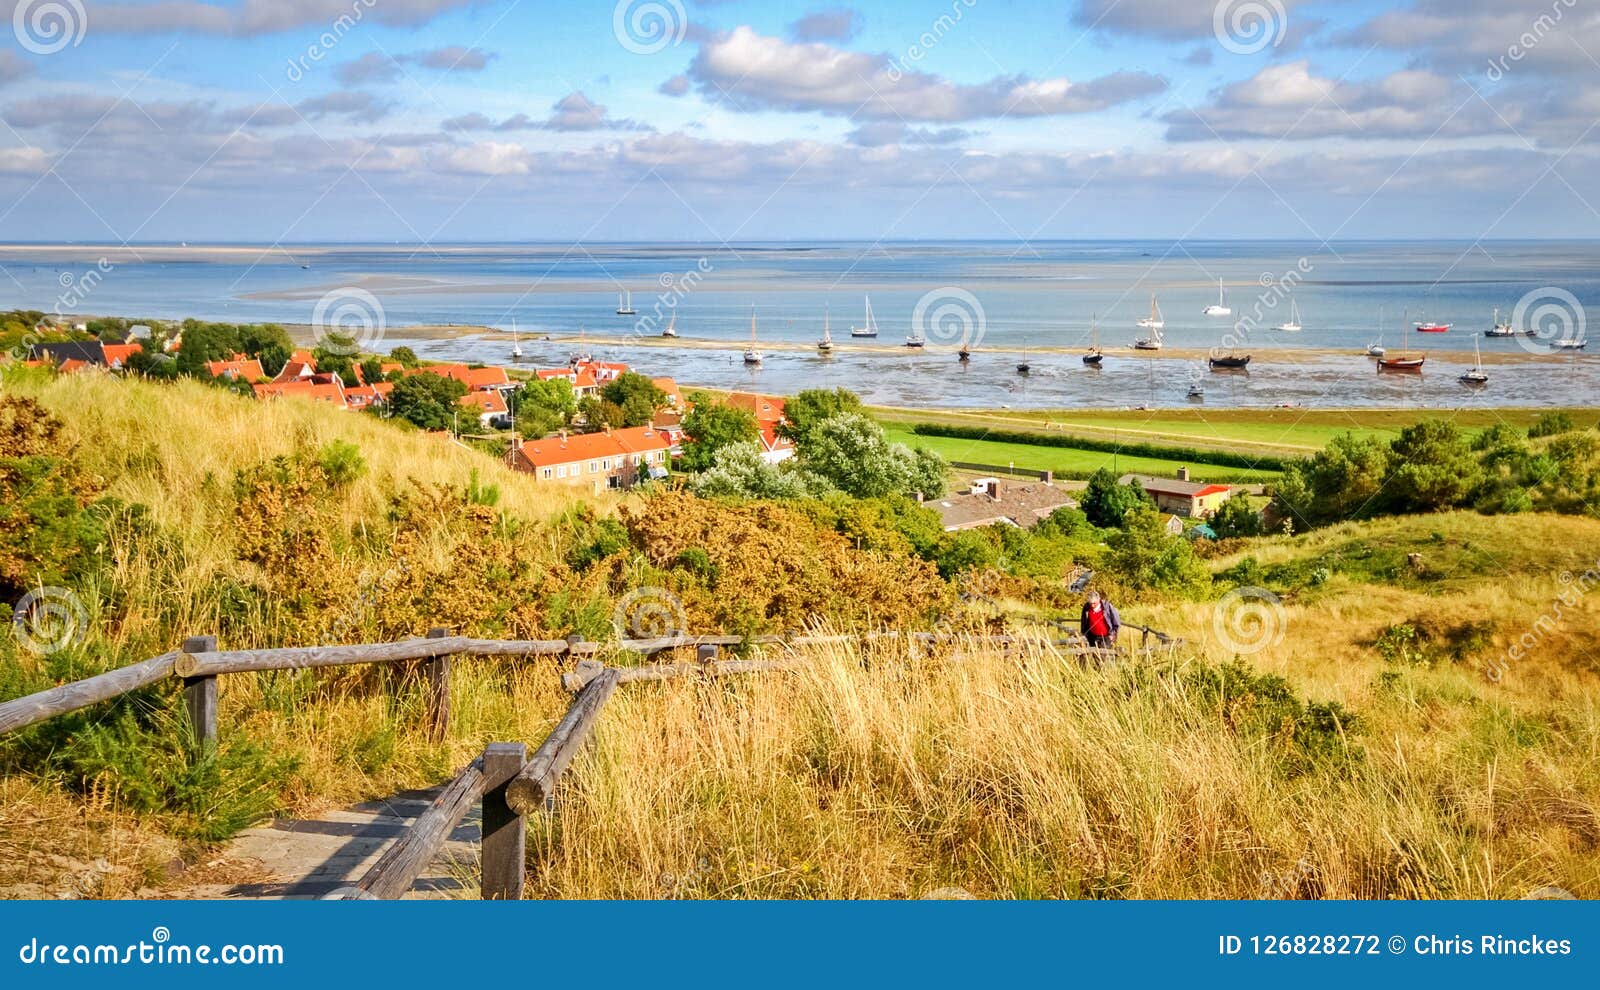 looking across the wadden sea from vlieland